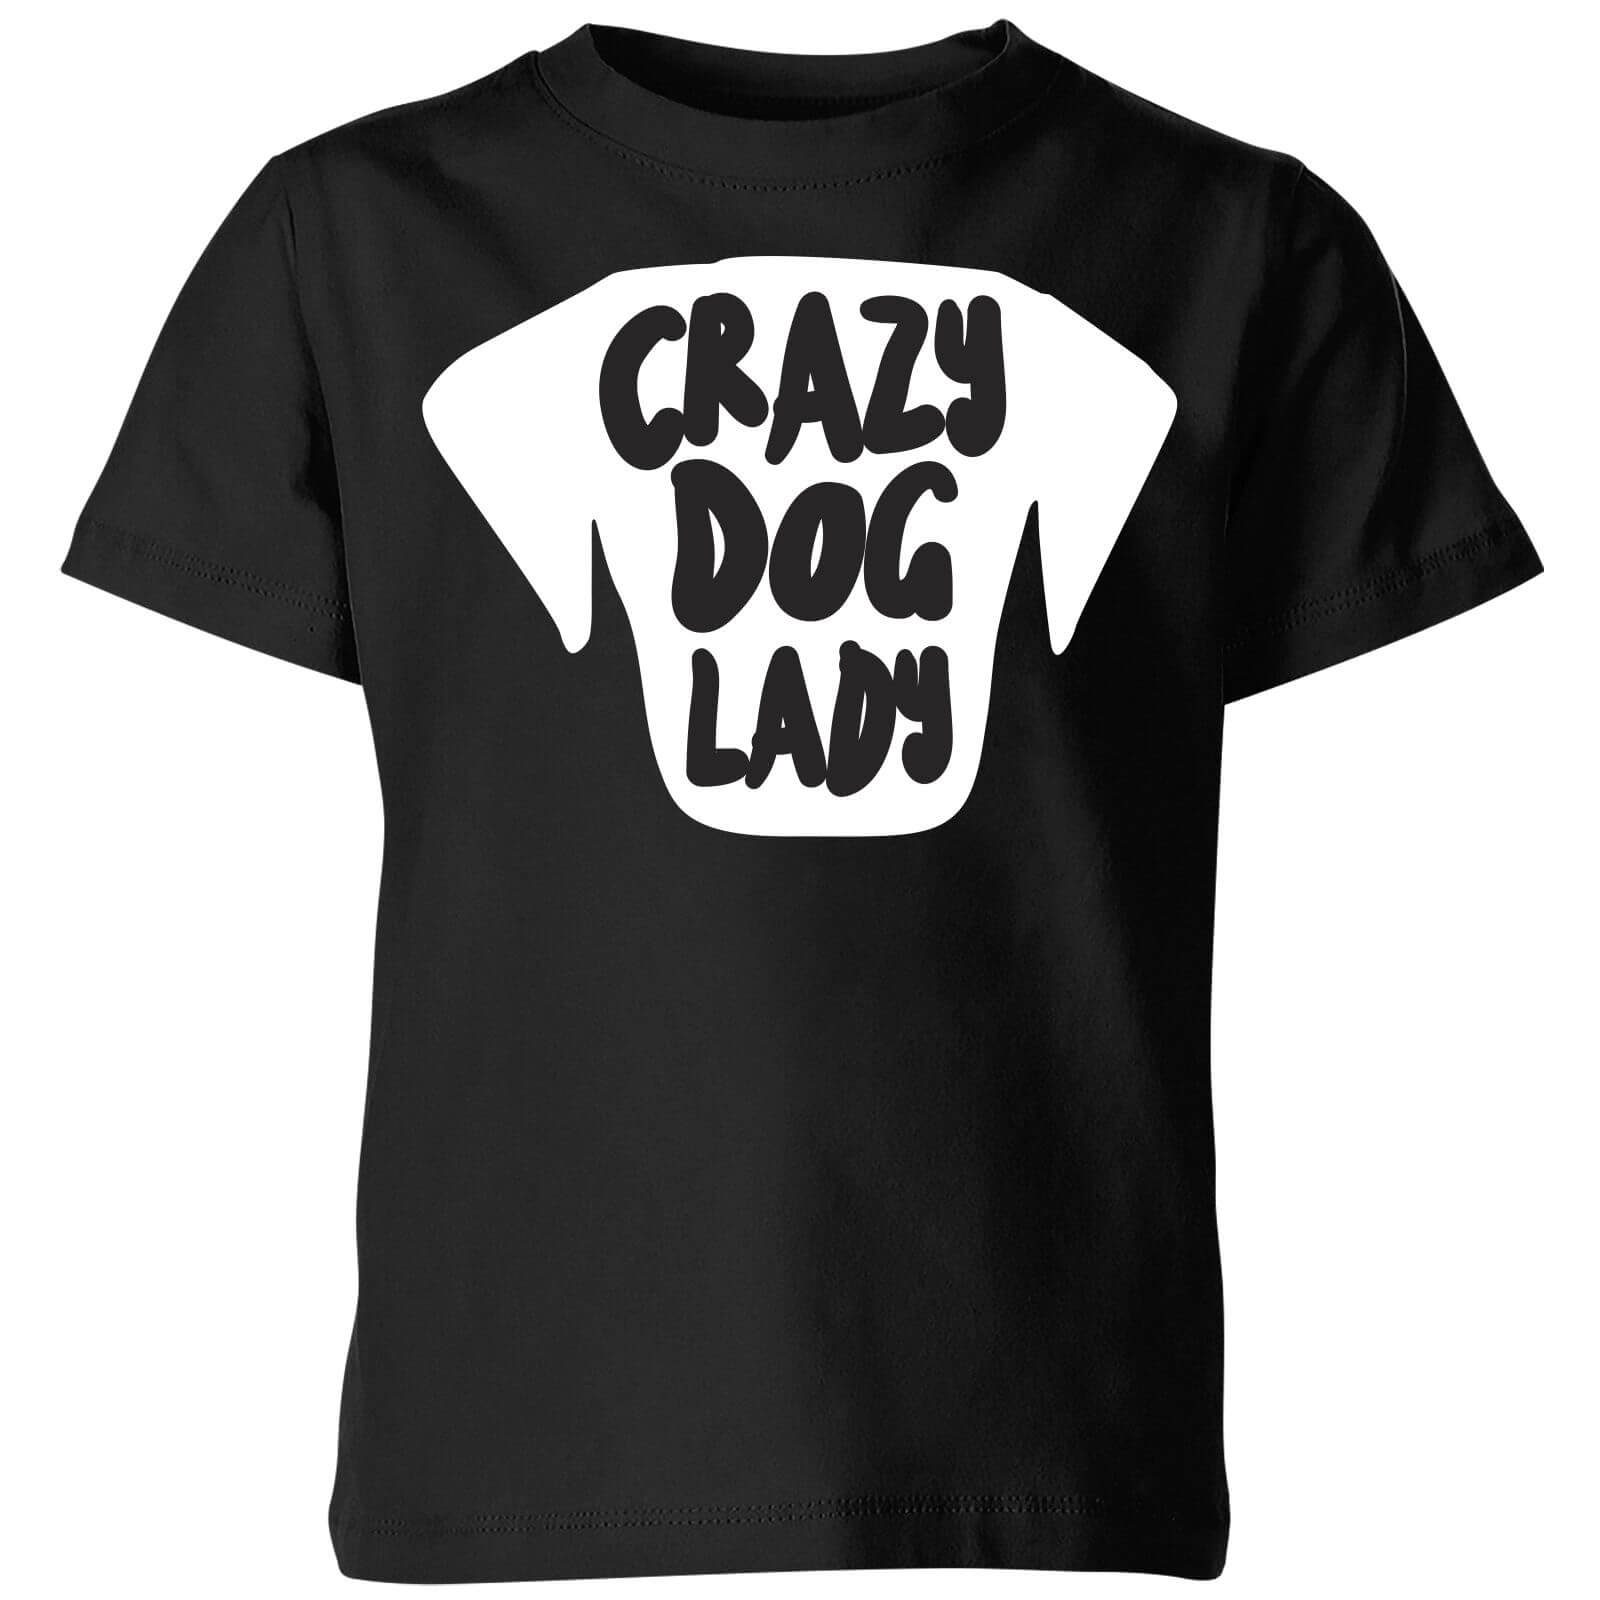 Crazy Dog Lady Kids' T-Shirt - Black - 3-4 Years - Black